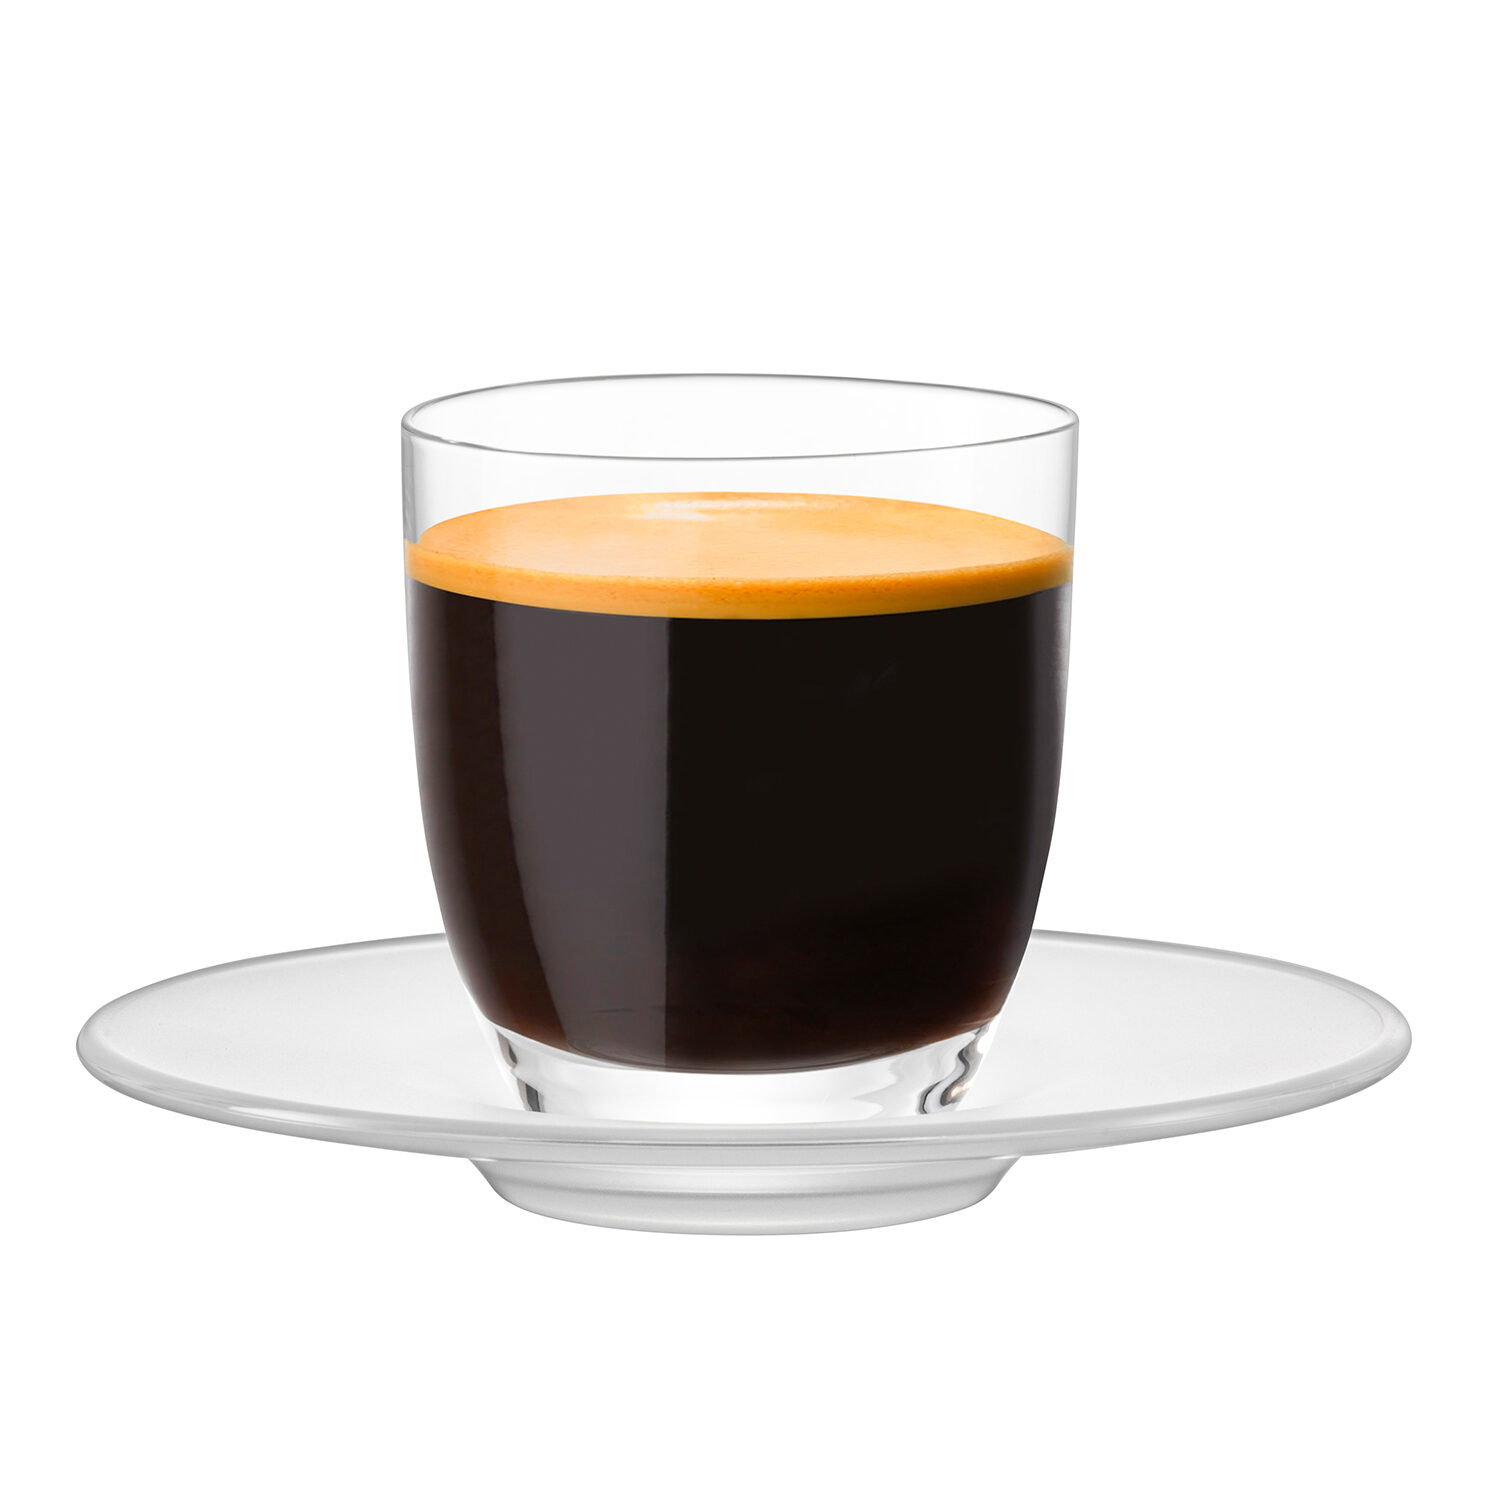 SUPERIOR espresso glass with satin plate